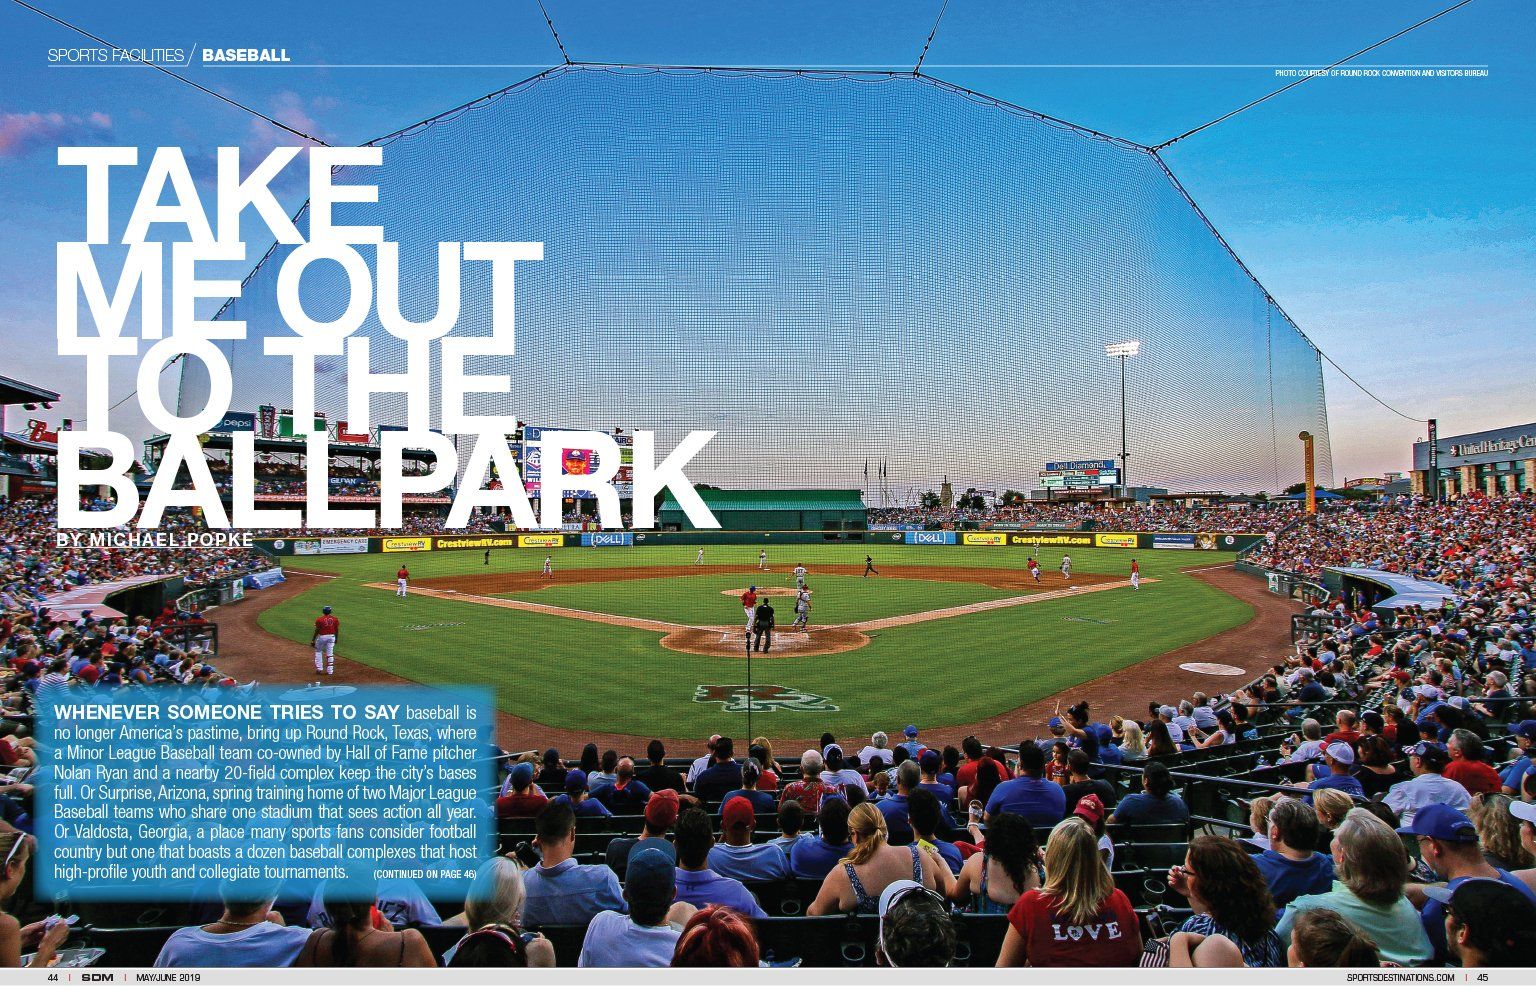 Sports Destination Management Magazine article about Baseball